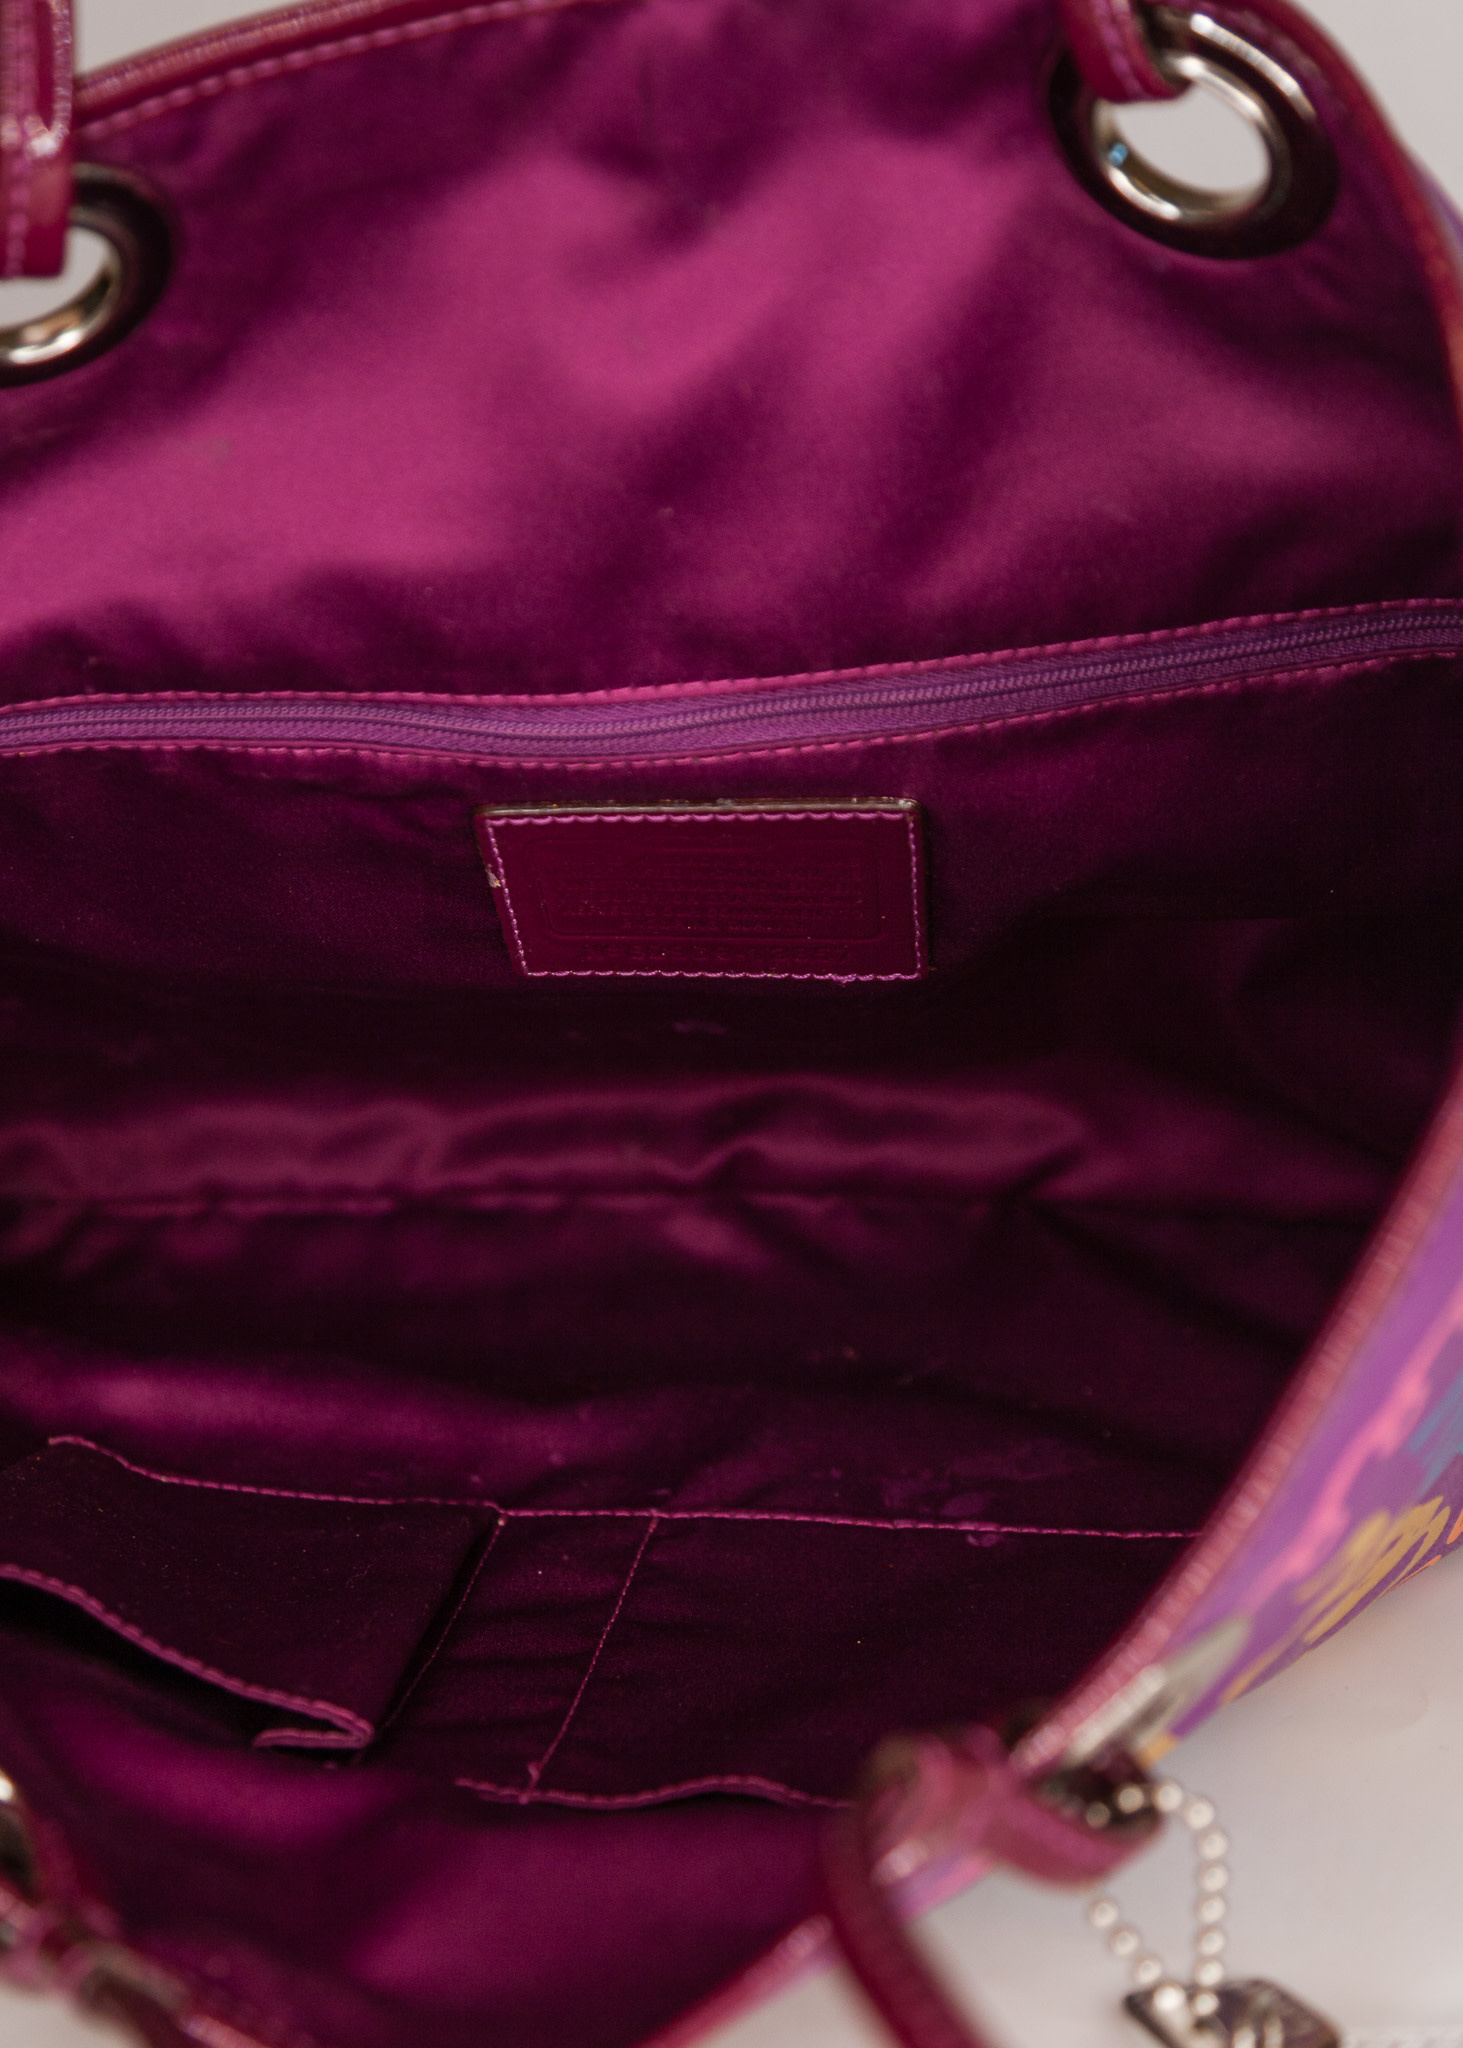 Coach | Bags | Coach Purple Poppy Handbag | Poshmark